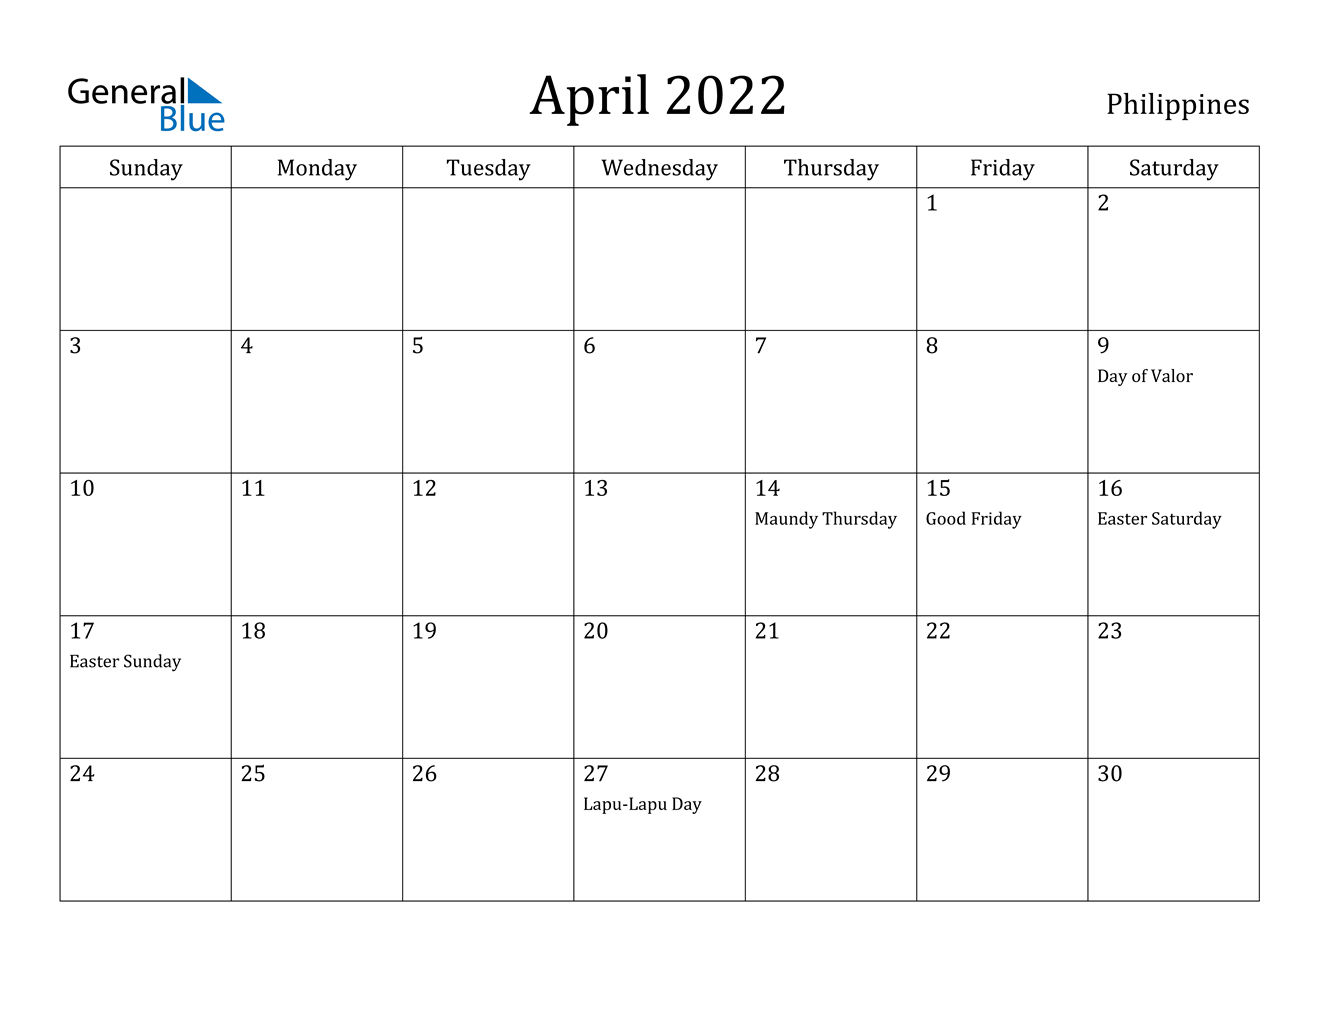 Get May 2022 Calendar Australia